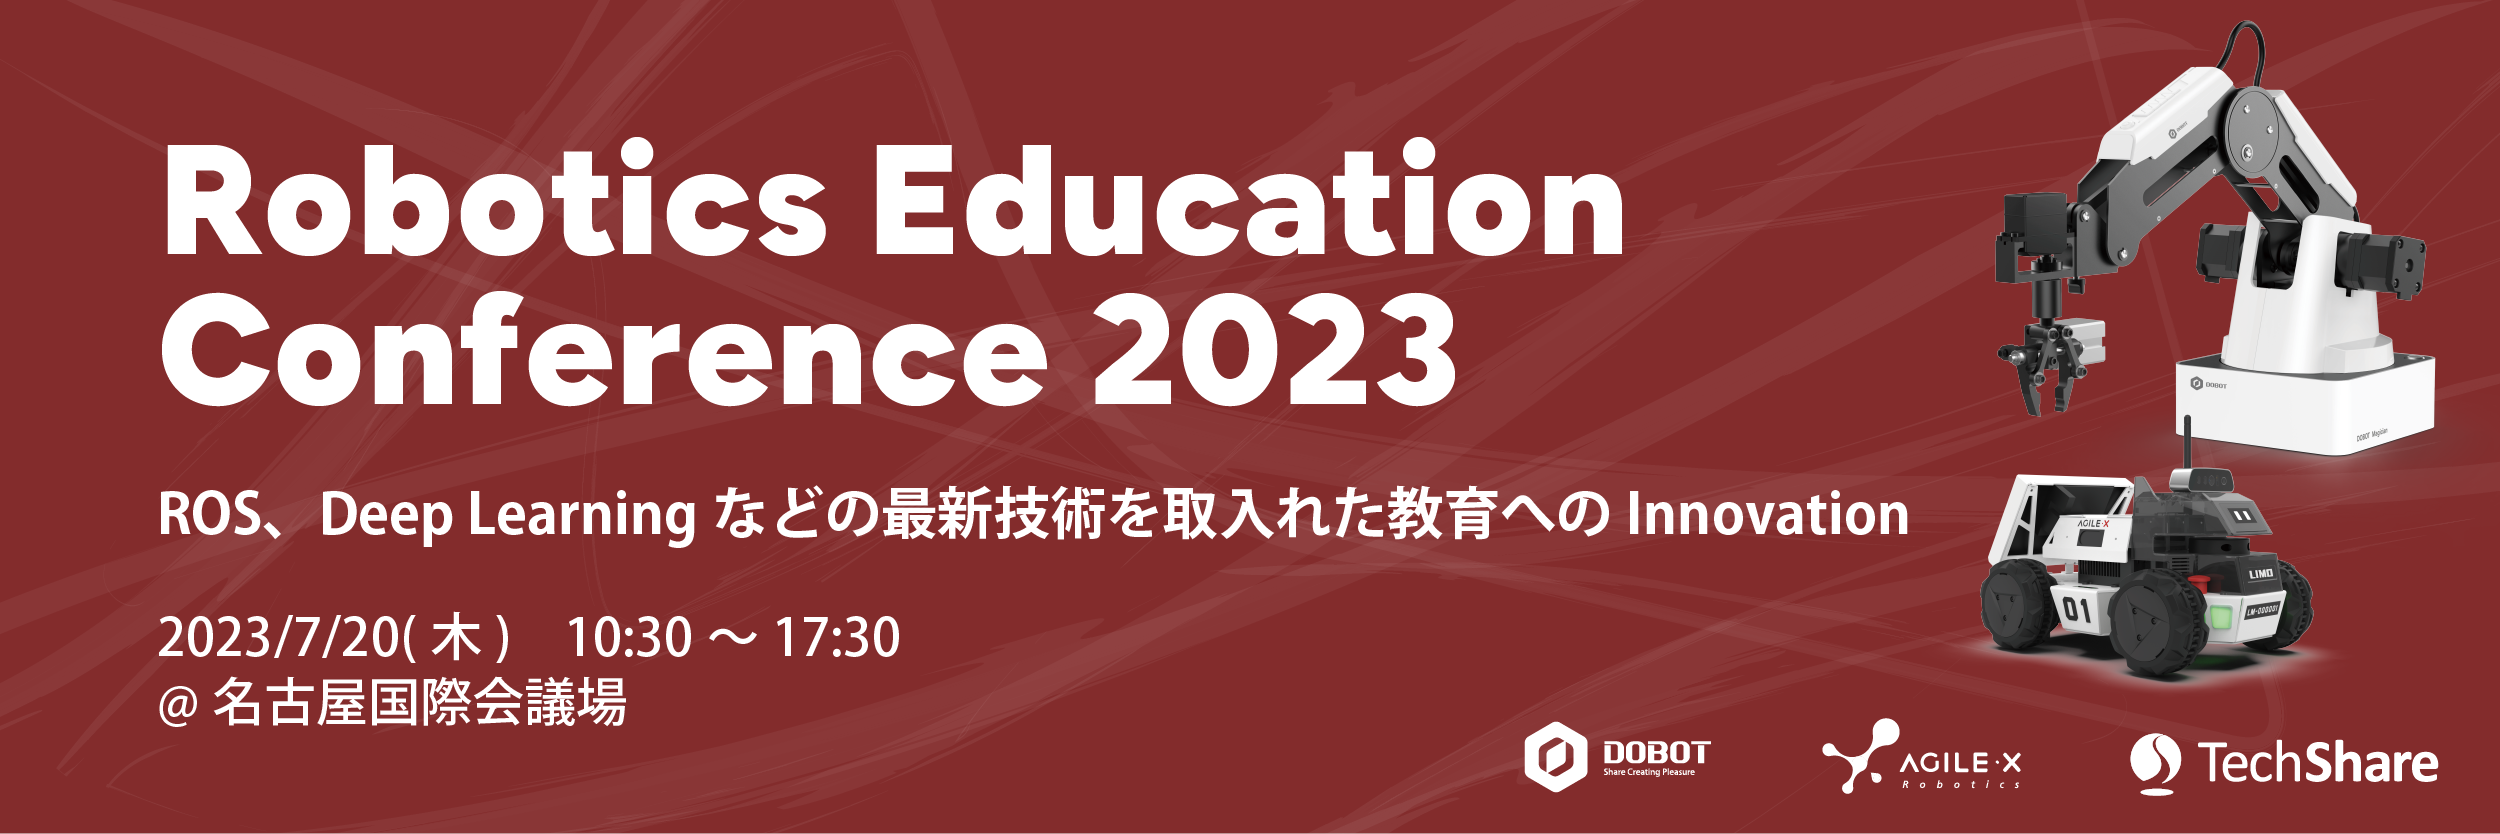 Robotics Education Conference 2023のバナー画像